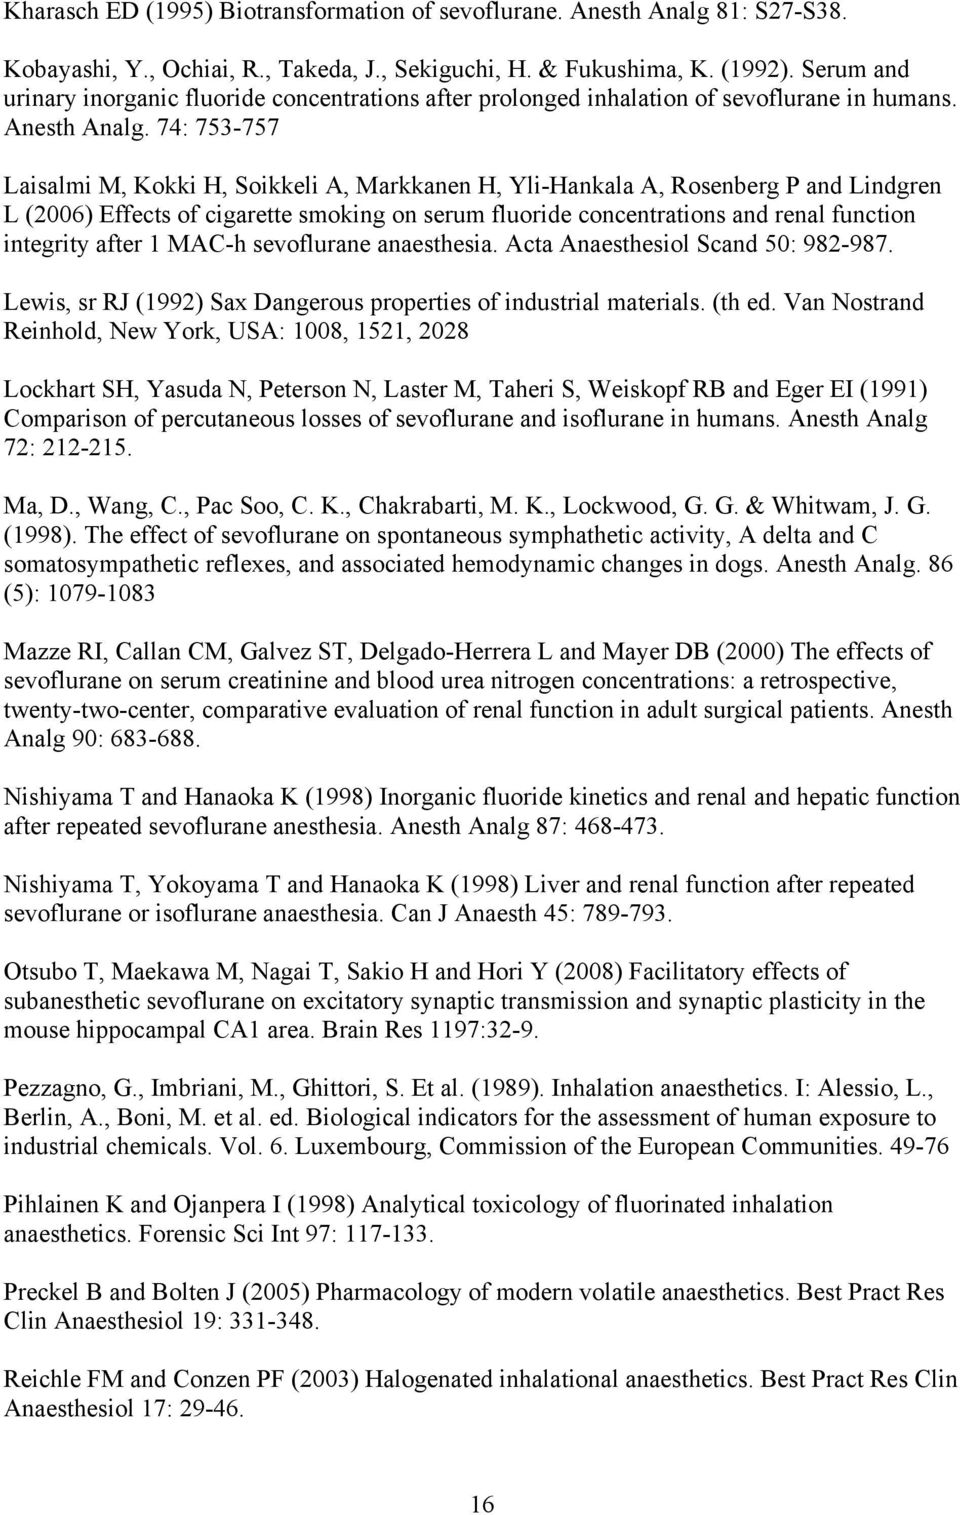 74: 753-757 Laisalmi M, Kokki H, Soikkeli A, Markkanen H, Yli-Hankala A, Rosenberg P and Lindgren L (2006) Effects of cigarette smoking on serum fluoride concentrations and renal function integrity